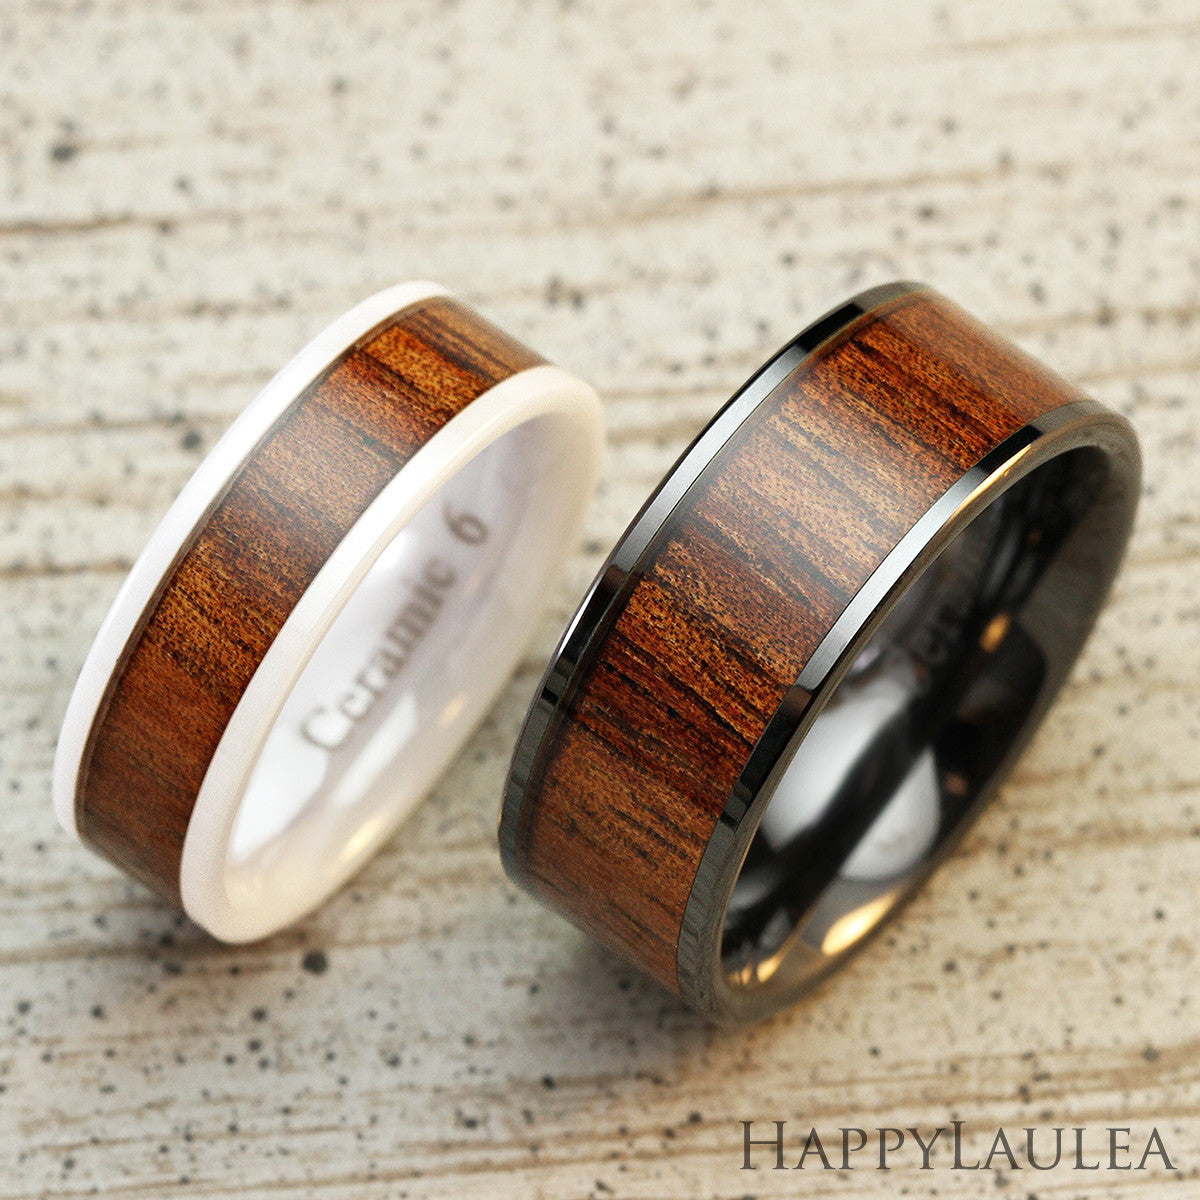 Pair of 6&8mm HI-TECH Ceramic Assorted Ring Set with Koa Wood Inlay - Flat Shape, Comfort Fitment